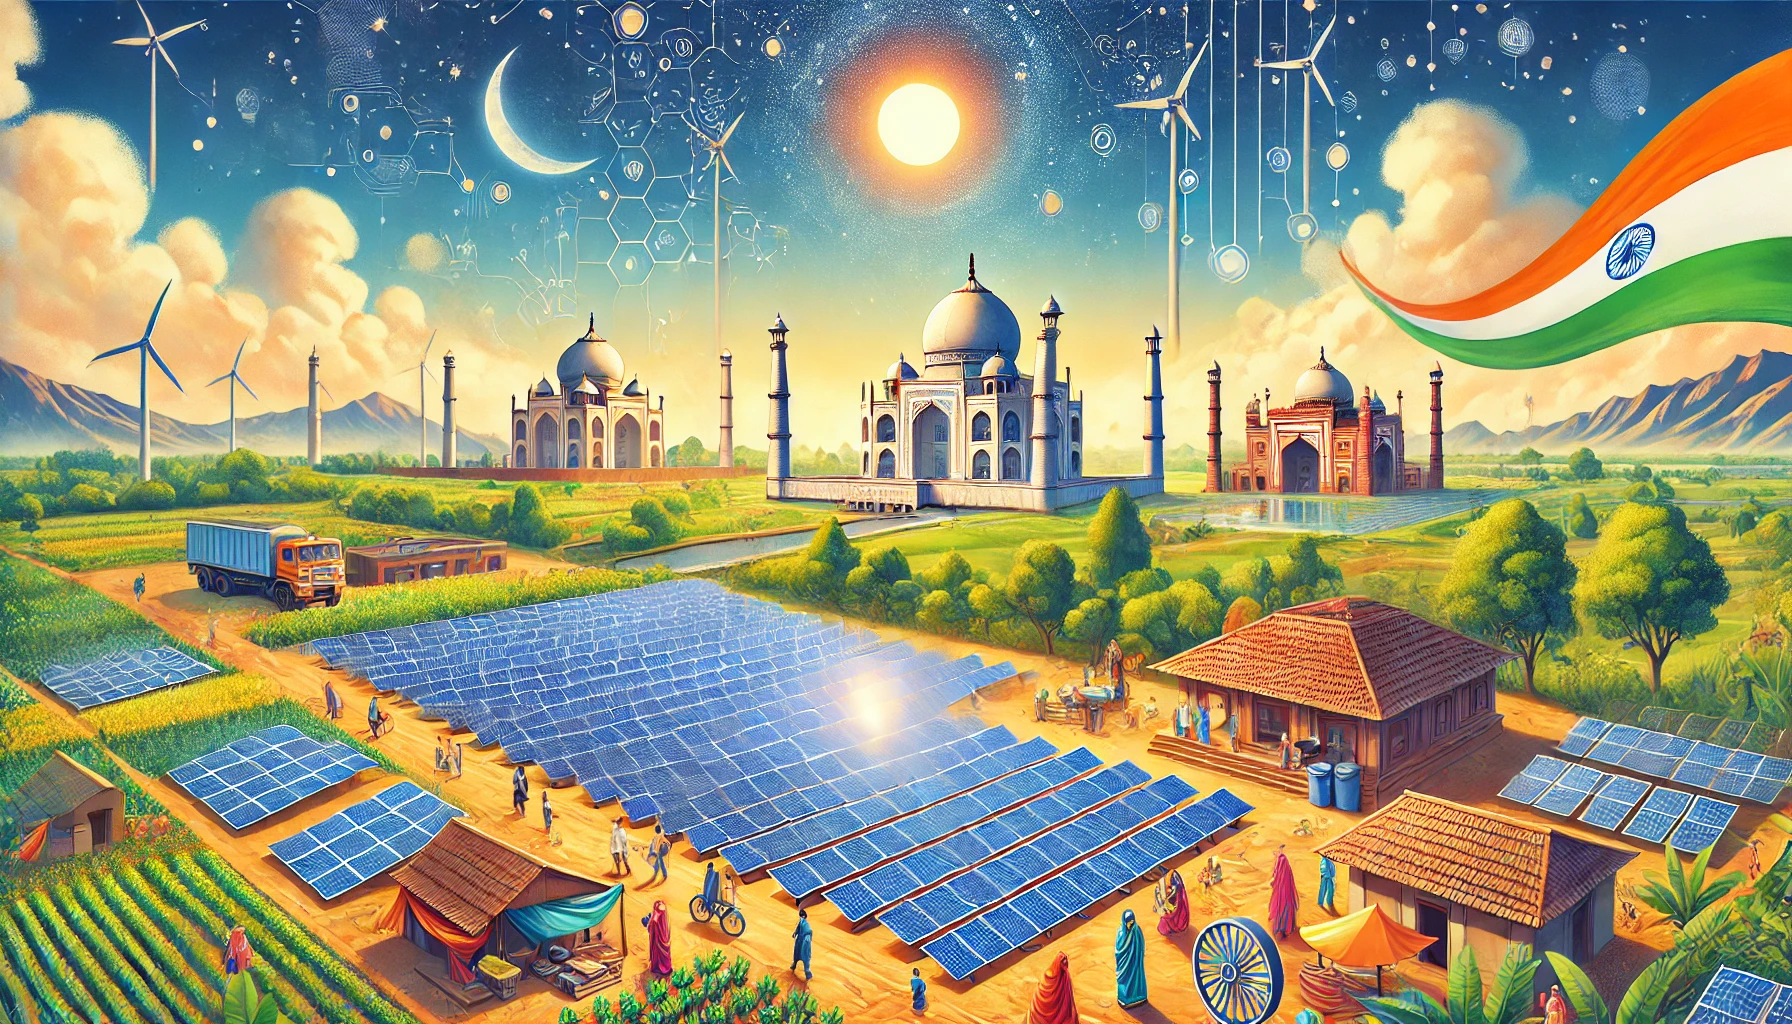 Growth of India's Solar Energy Sector